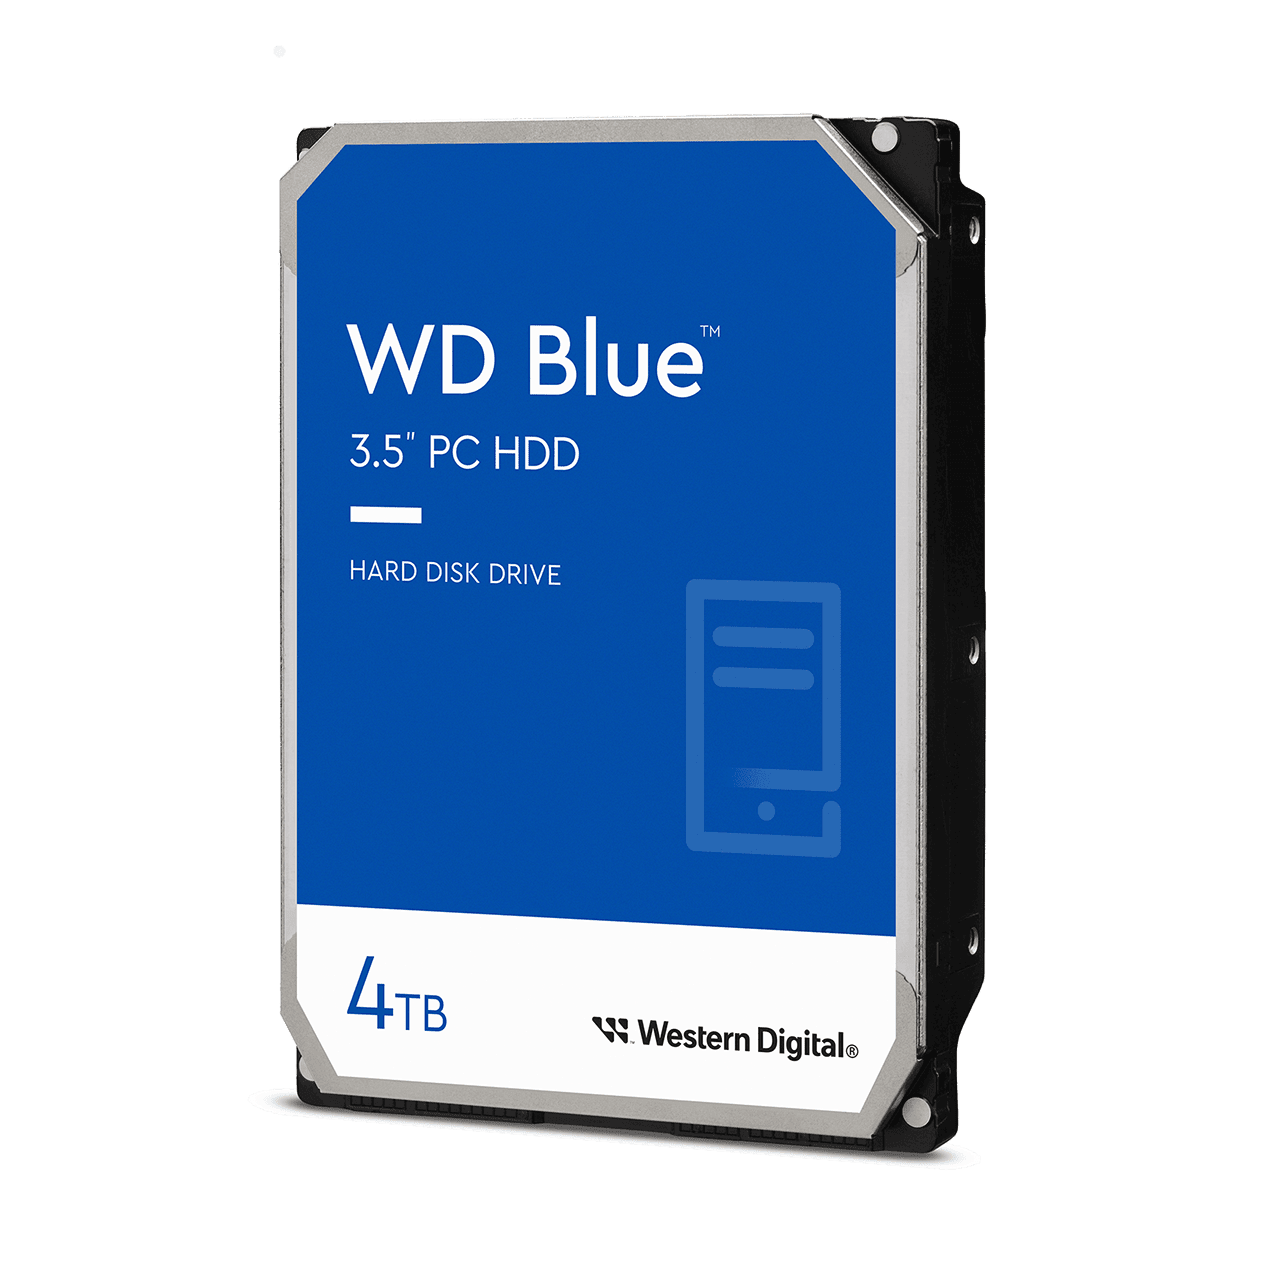 WD Blue 3.5in PC Hard Drive - 4TB - Image8